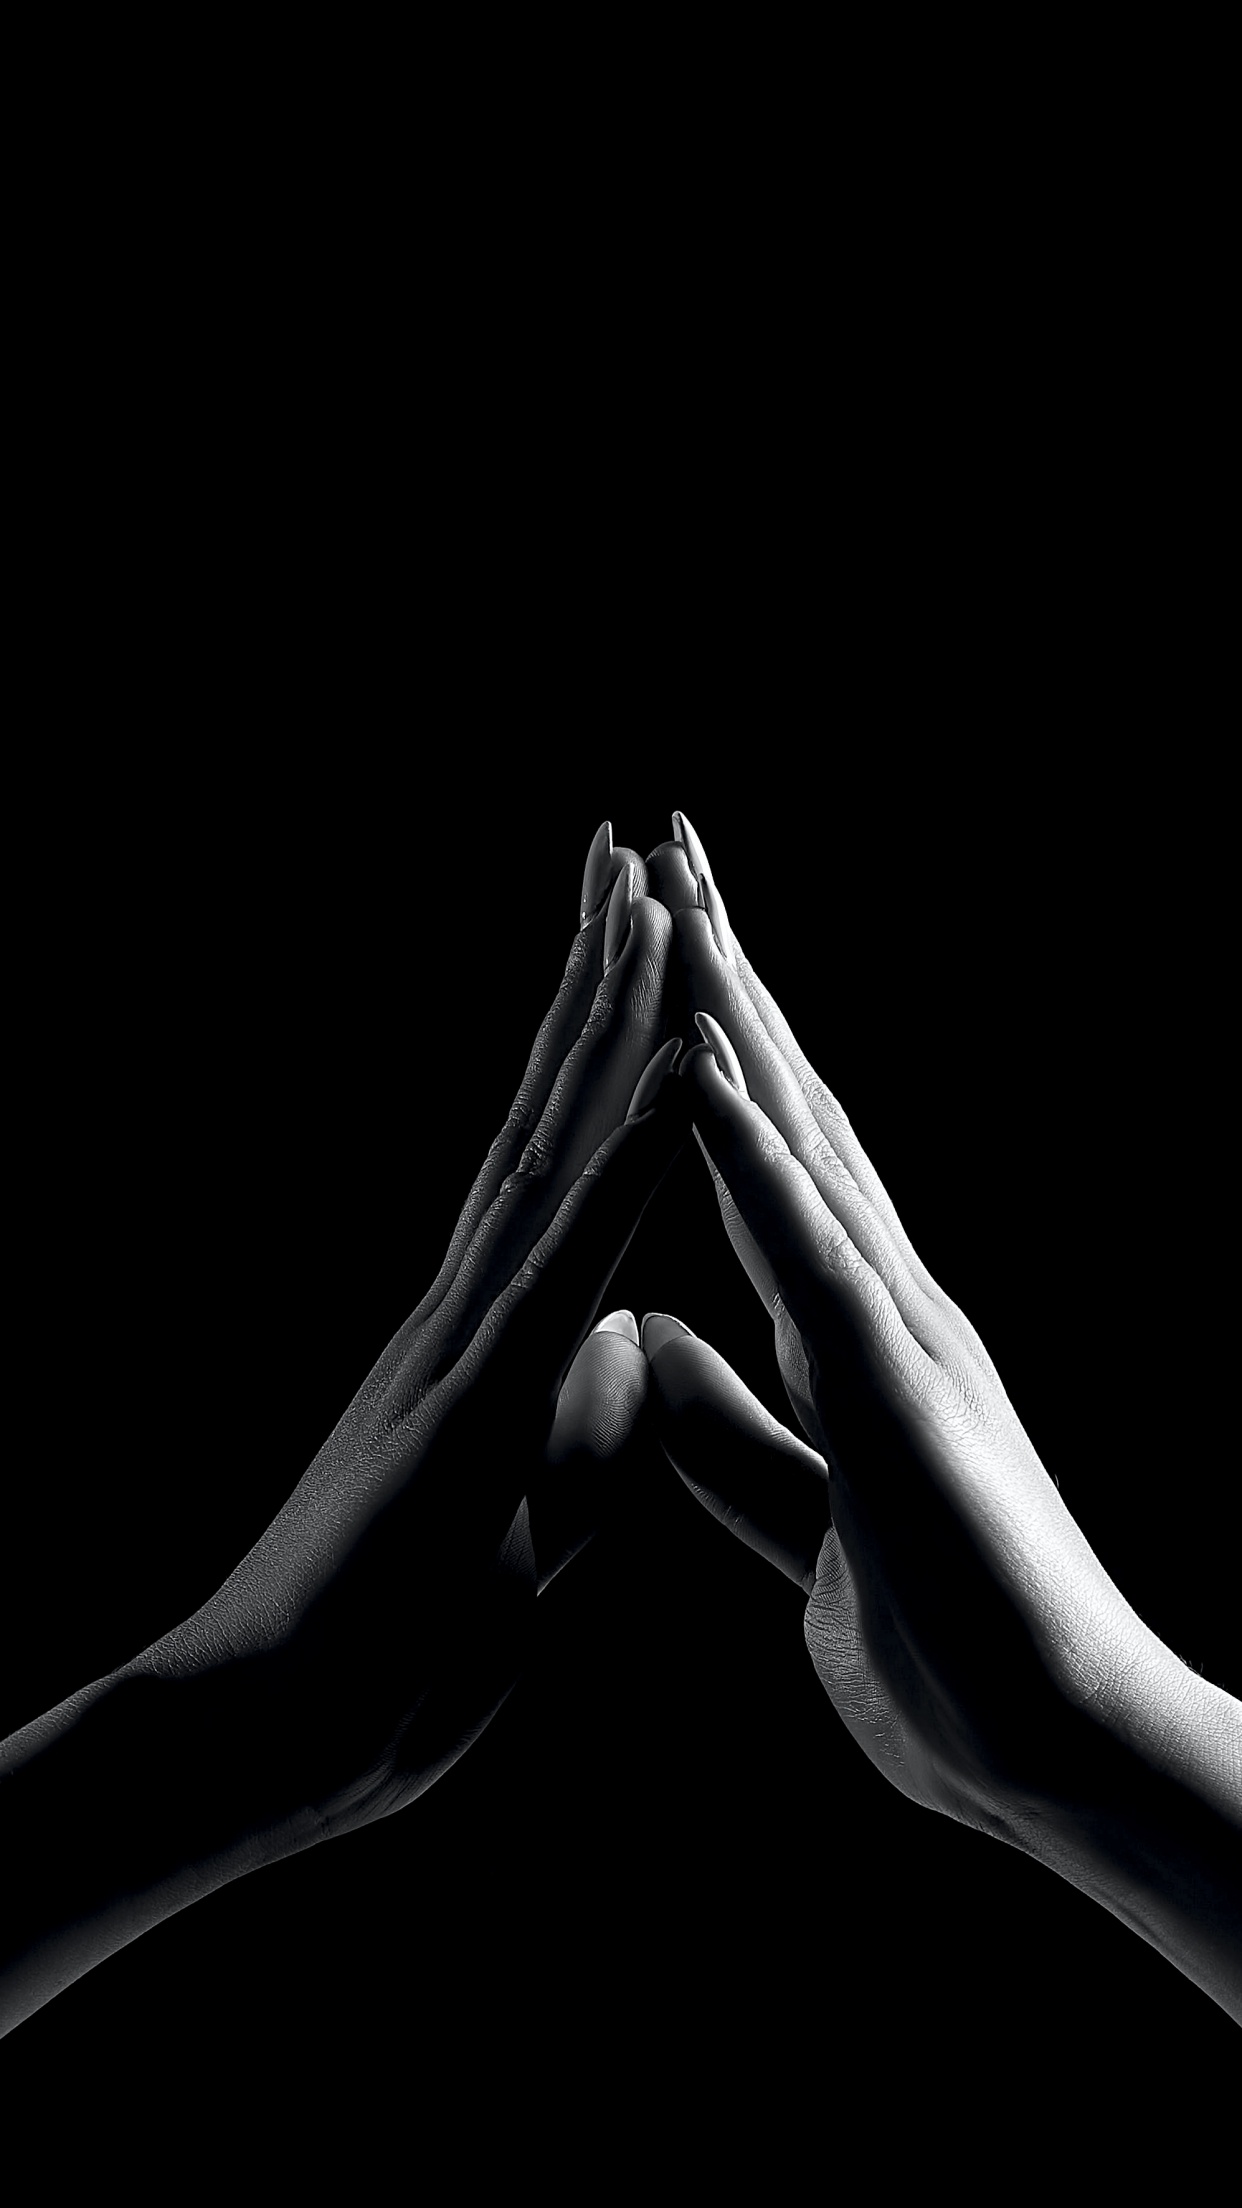 Praying Hands Wallpaper 4K, Hands together, Photography, #2949